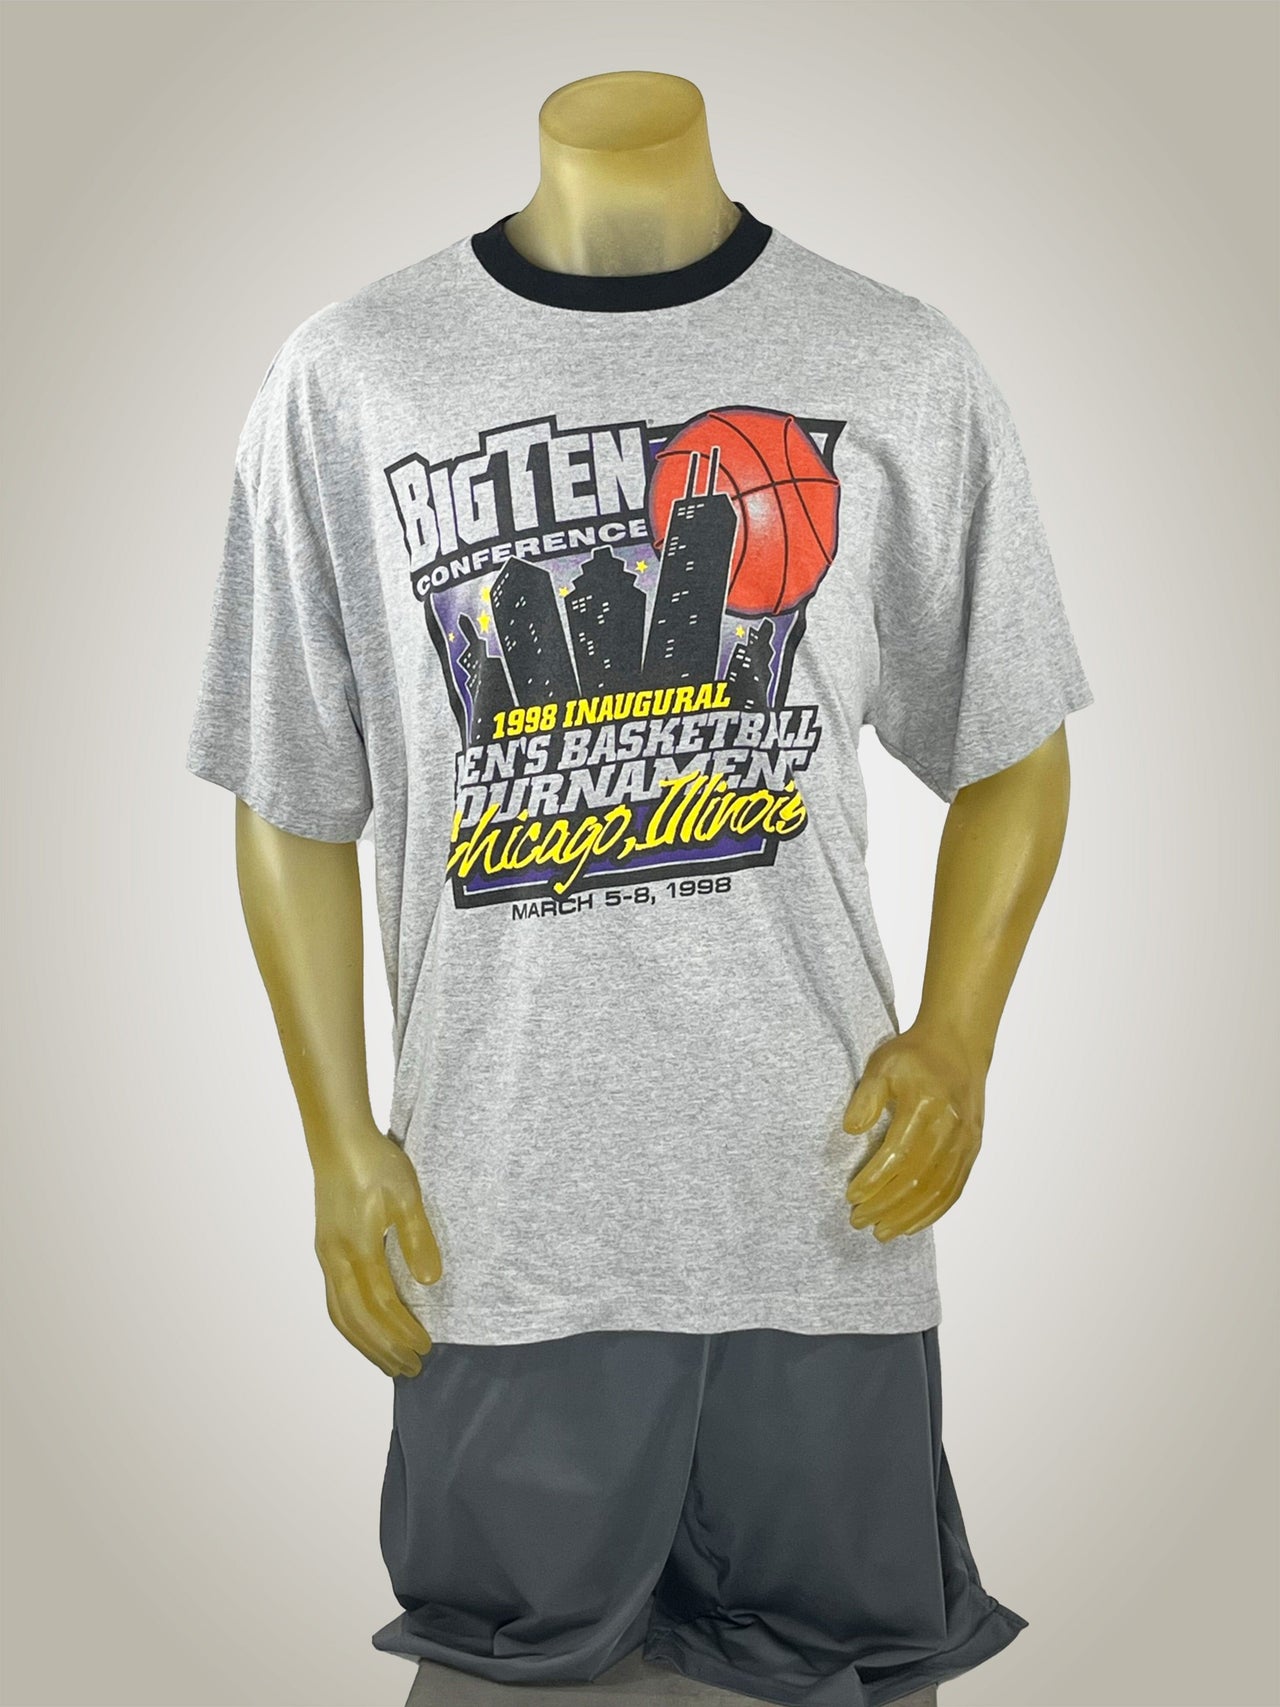 Gameday Grails T-Shirt X-Large Vintage Big Ten 1998 Inaugural Basketball Tournament T-Shirt